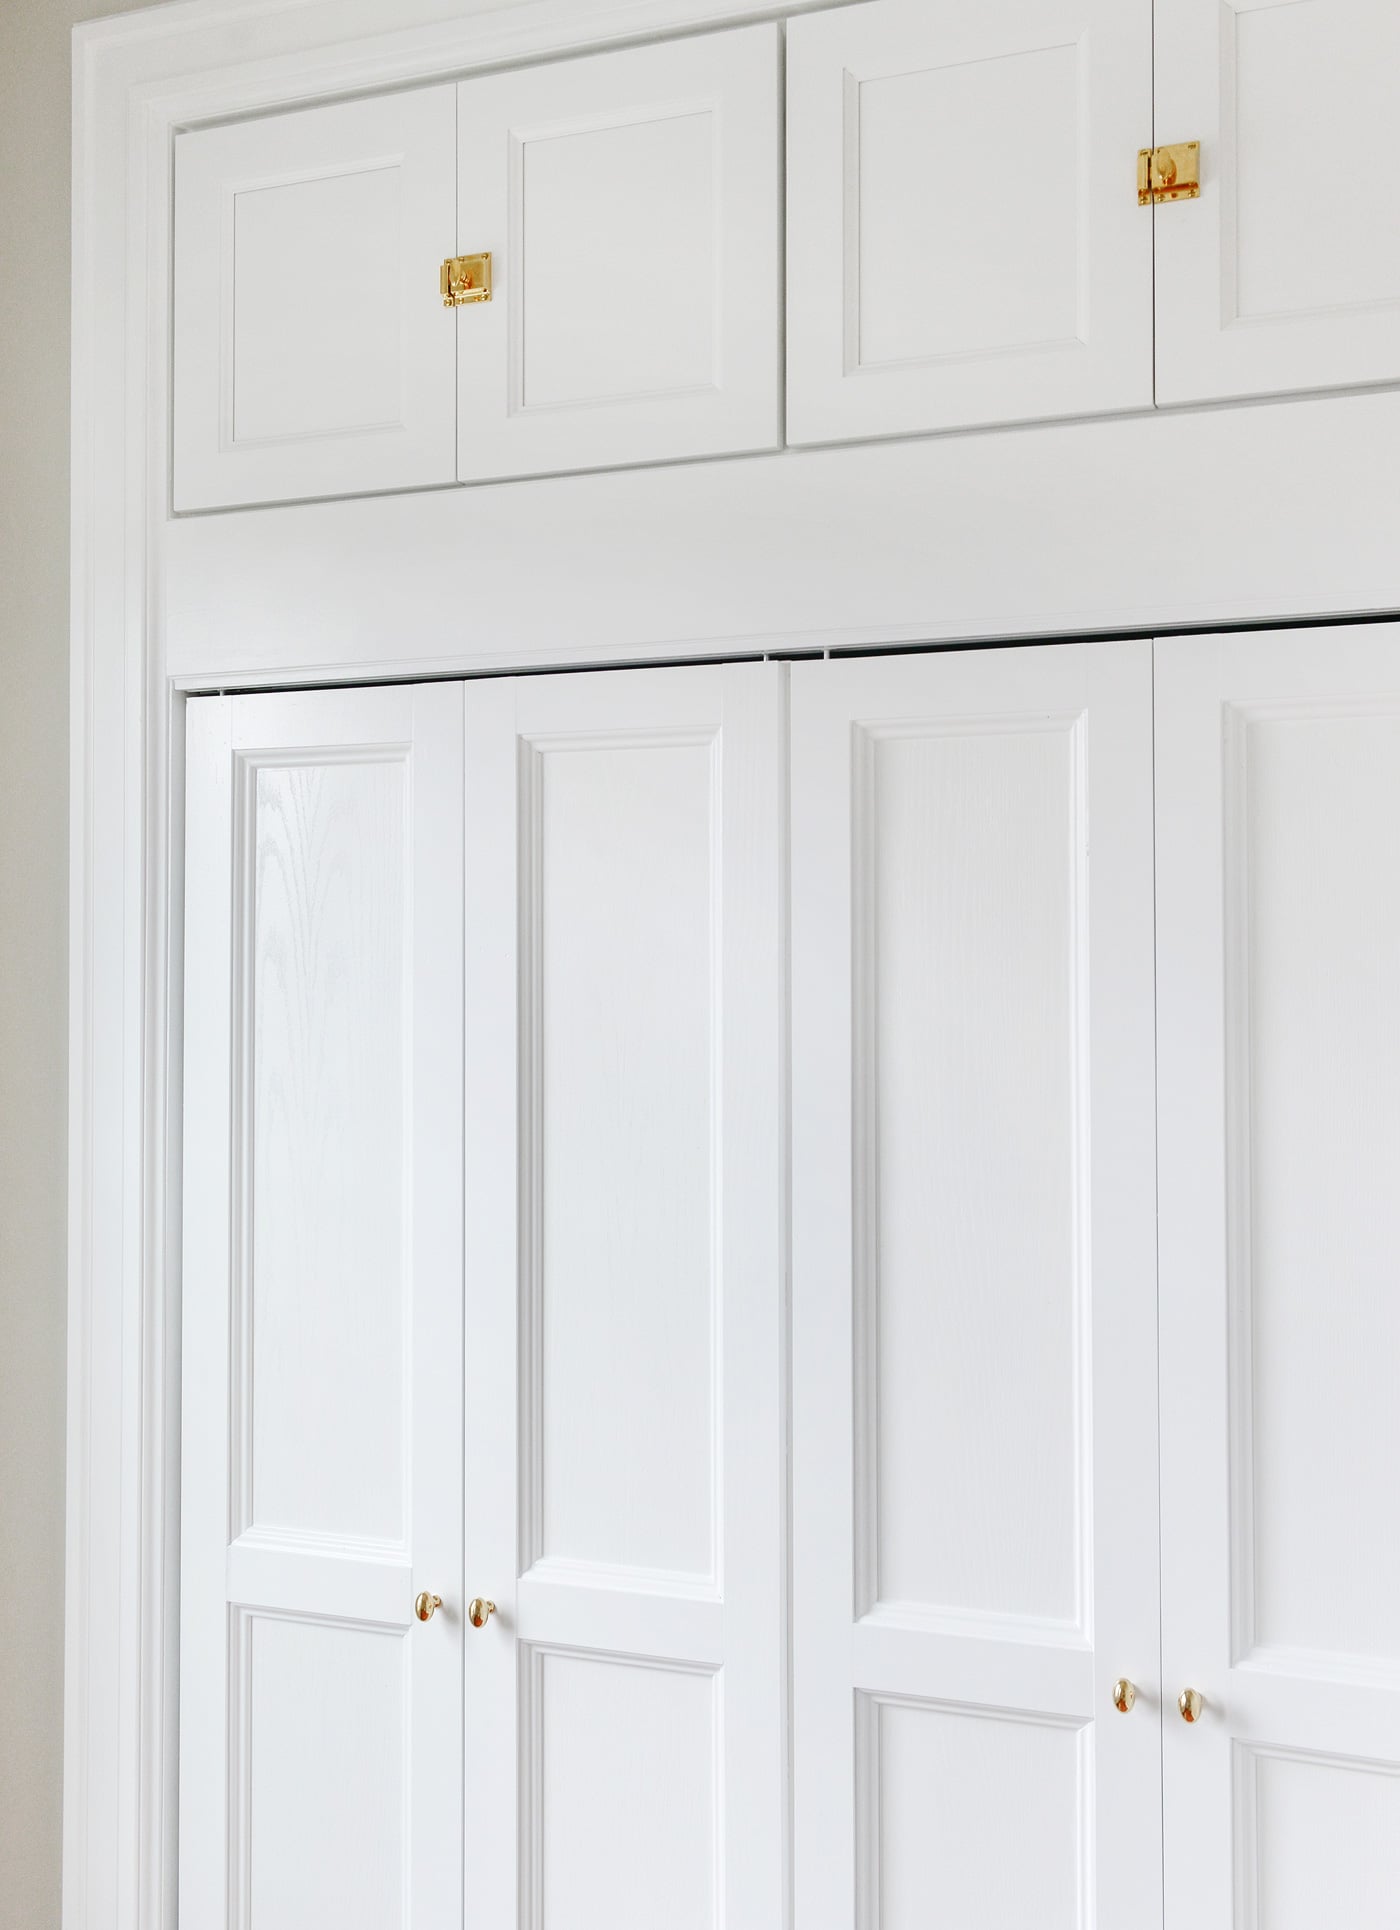 detail of custom molding on bi-fold doors | via Yellow Brick Home